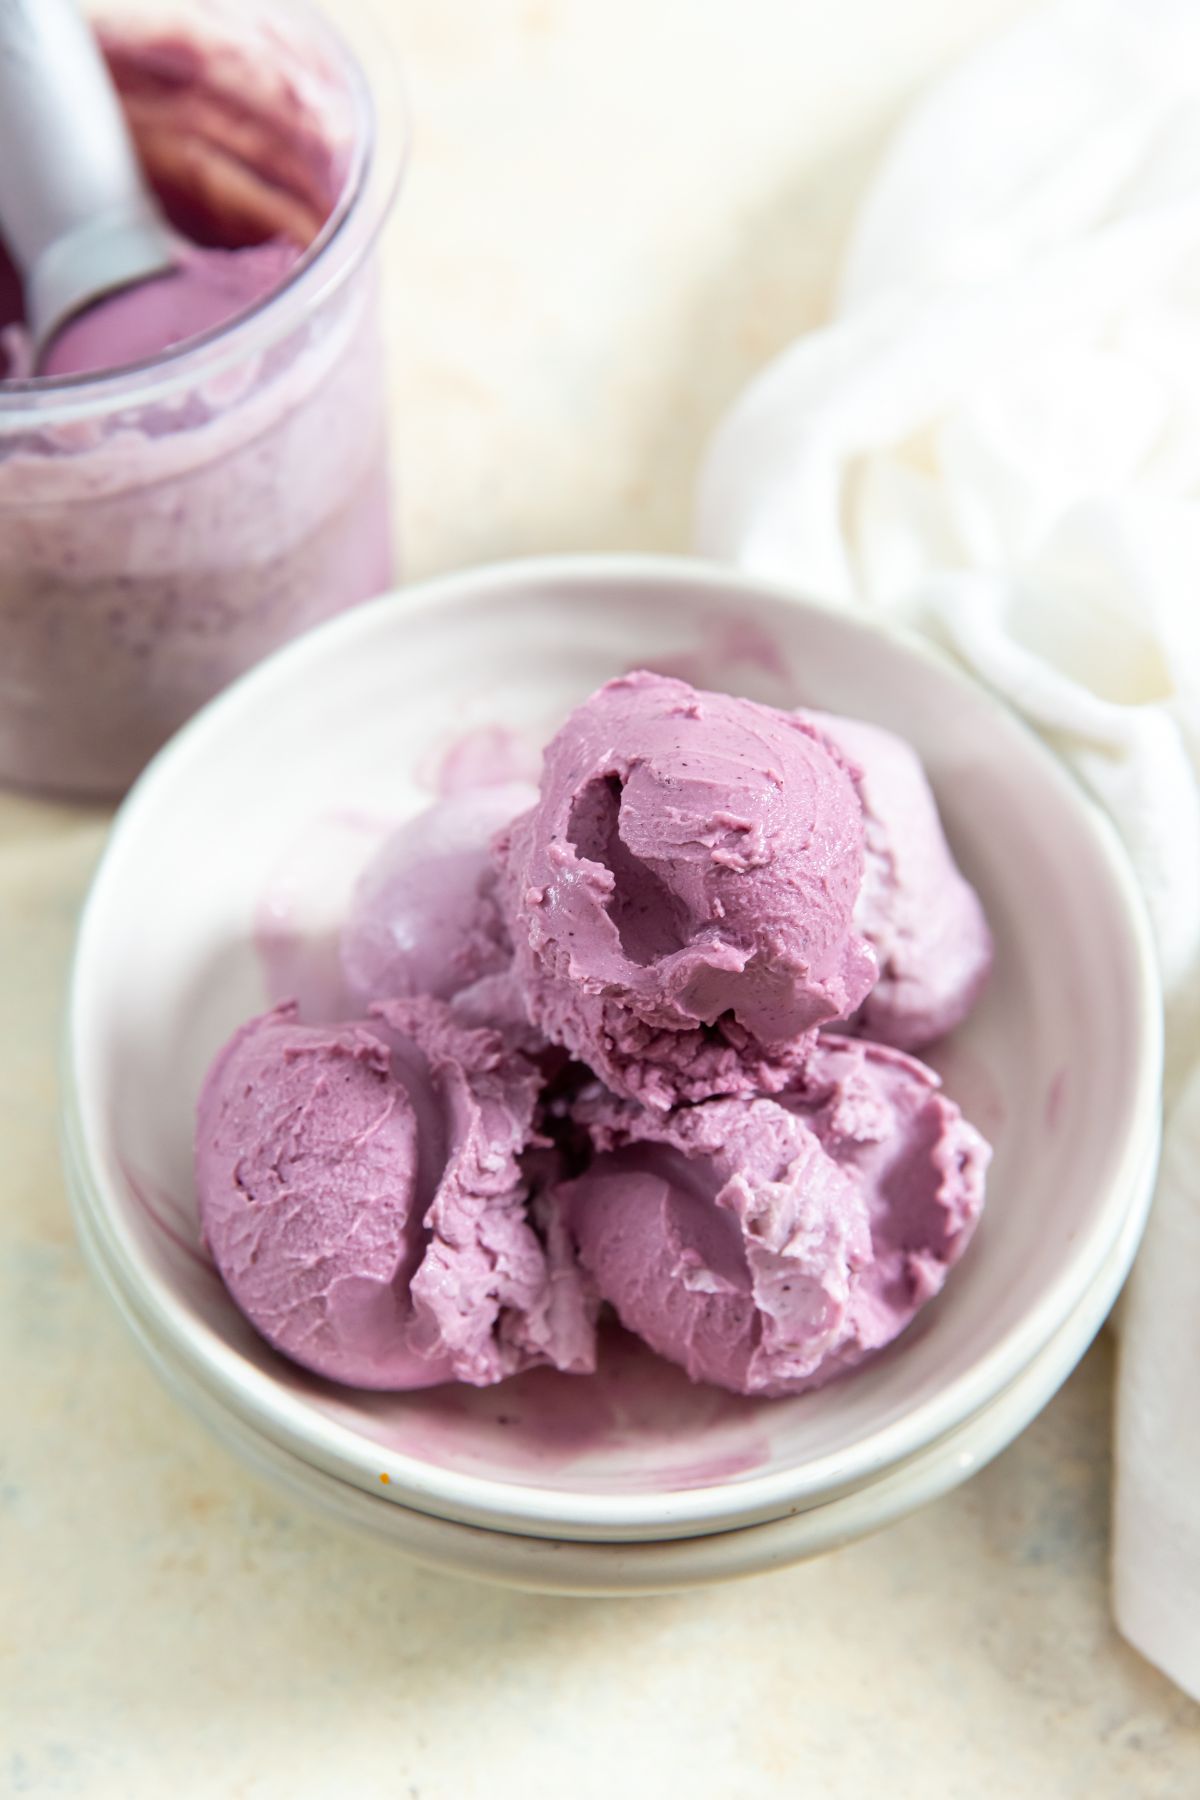 ninja creami low carb blueberry frozen yogurt in a bowl with white napkin